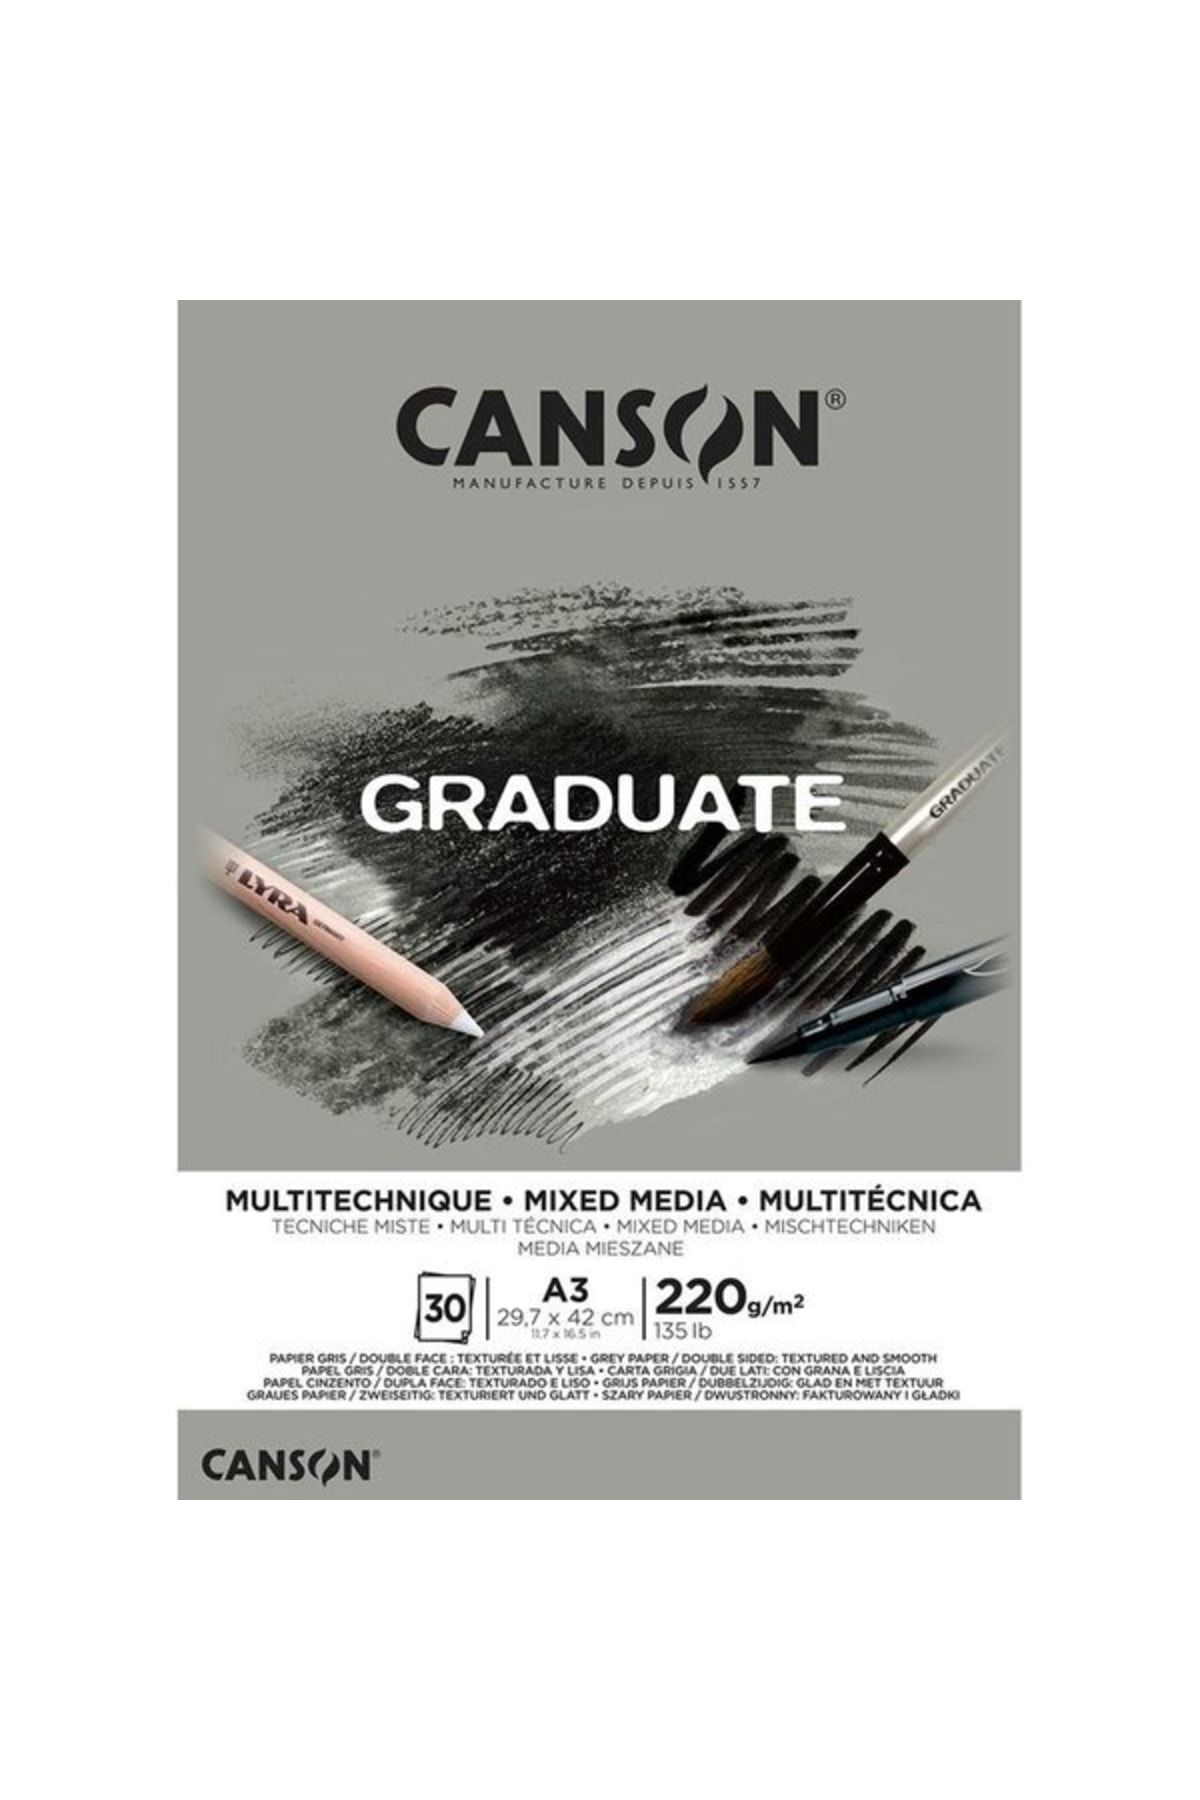 Canson Graduate Mıx Medıa Blok Grey 30s A3 220g - 400110372